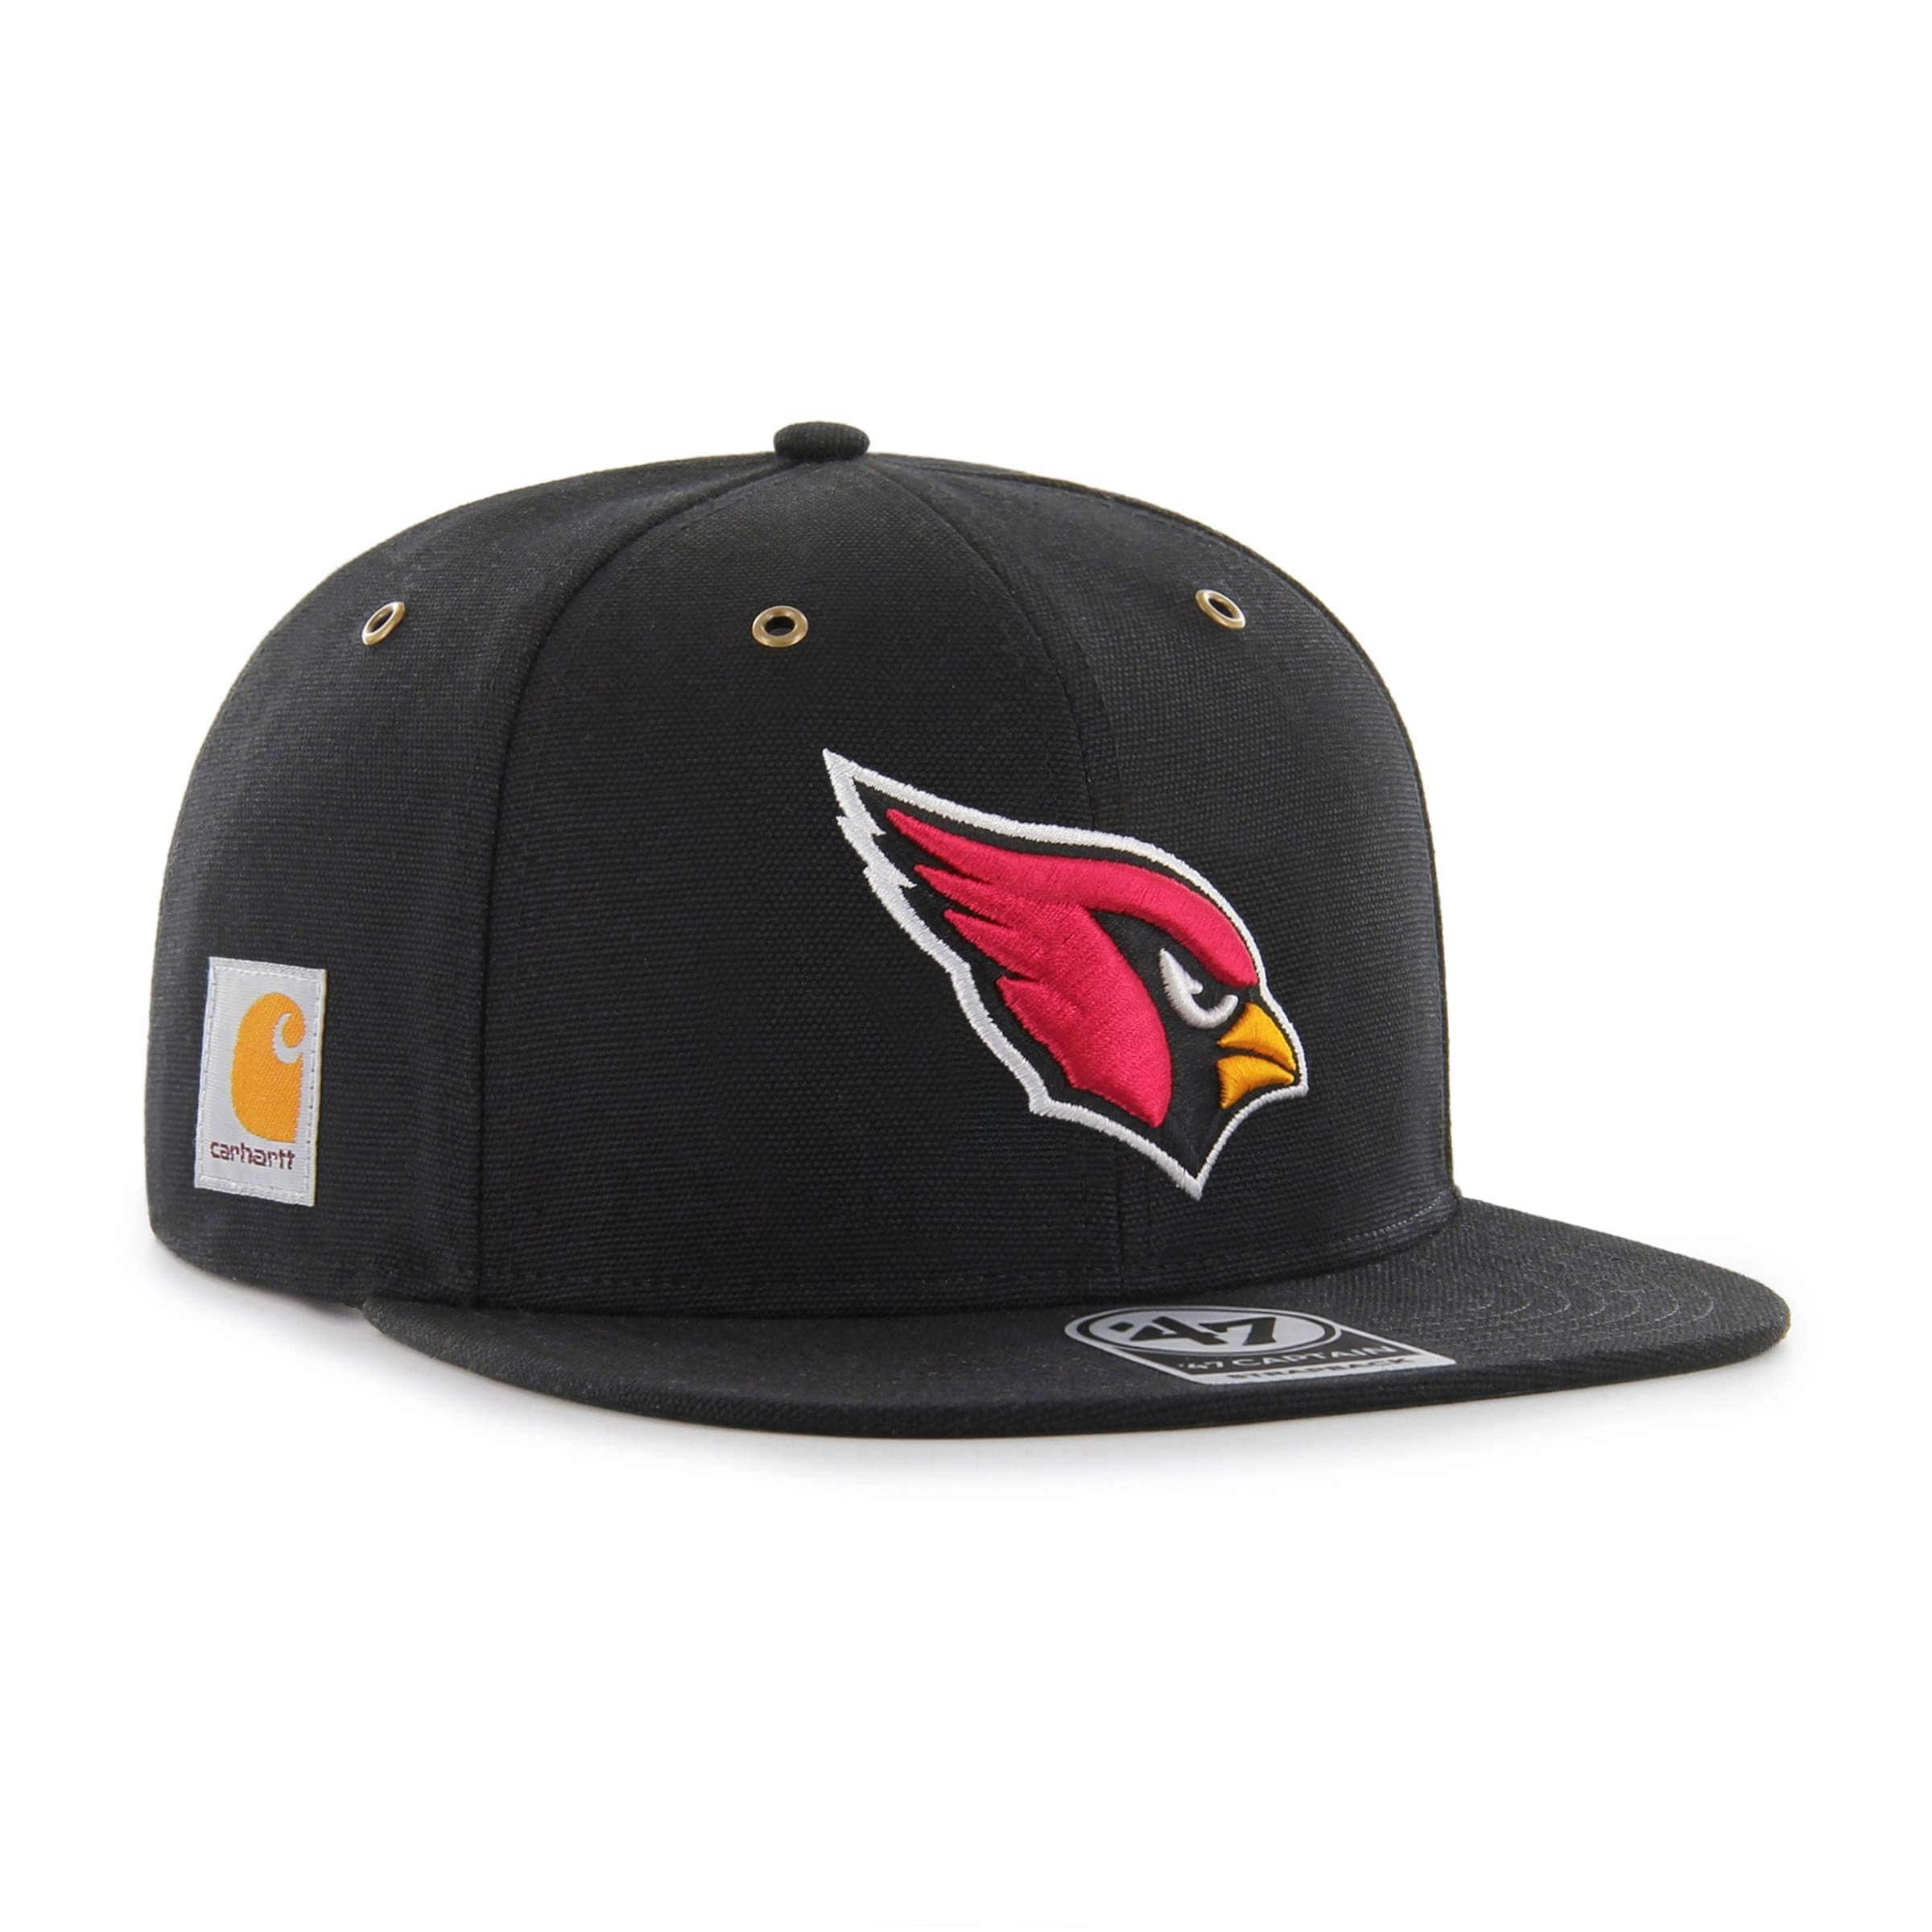 az cardinals black hat